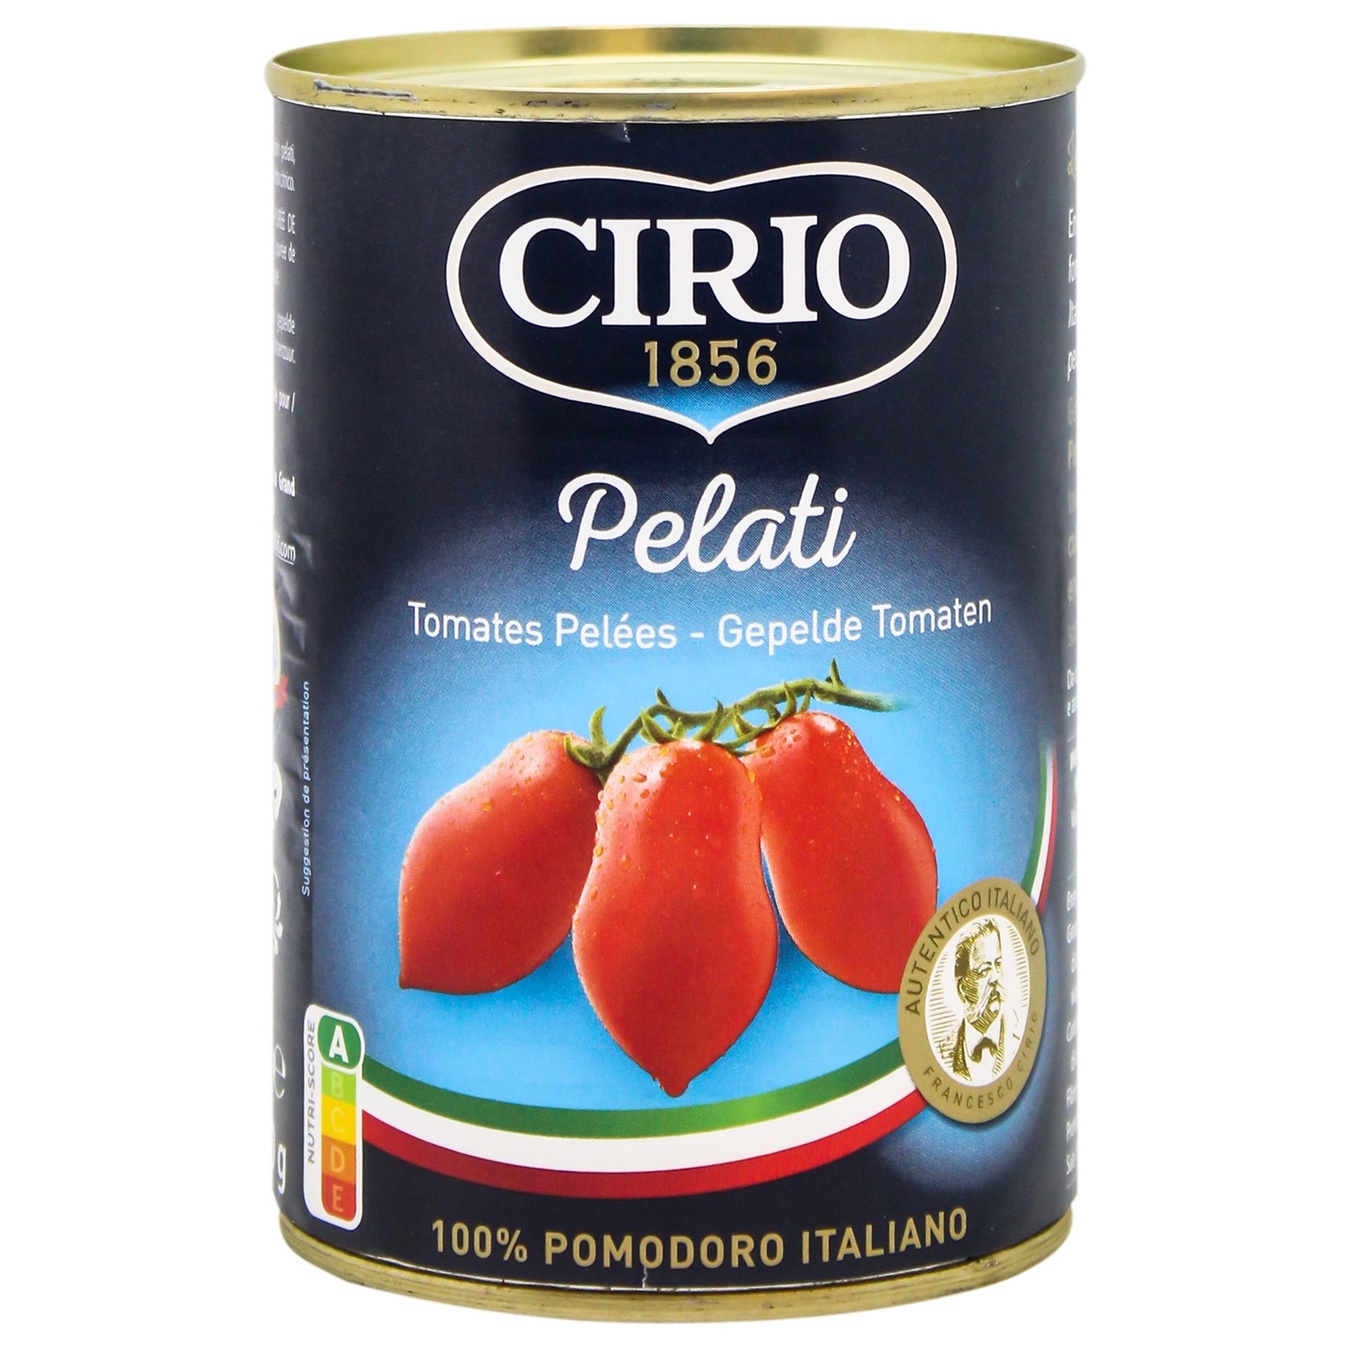 Peeled tomatoes Pelati Cirio 400g